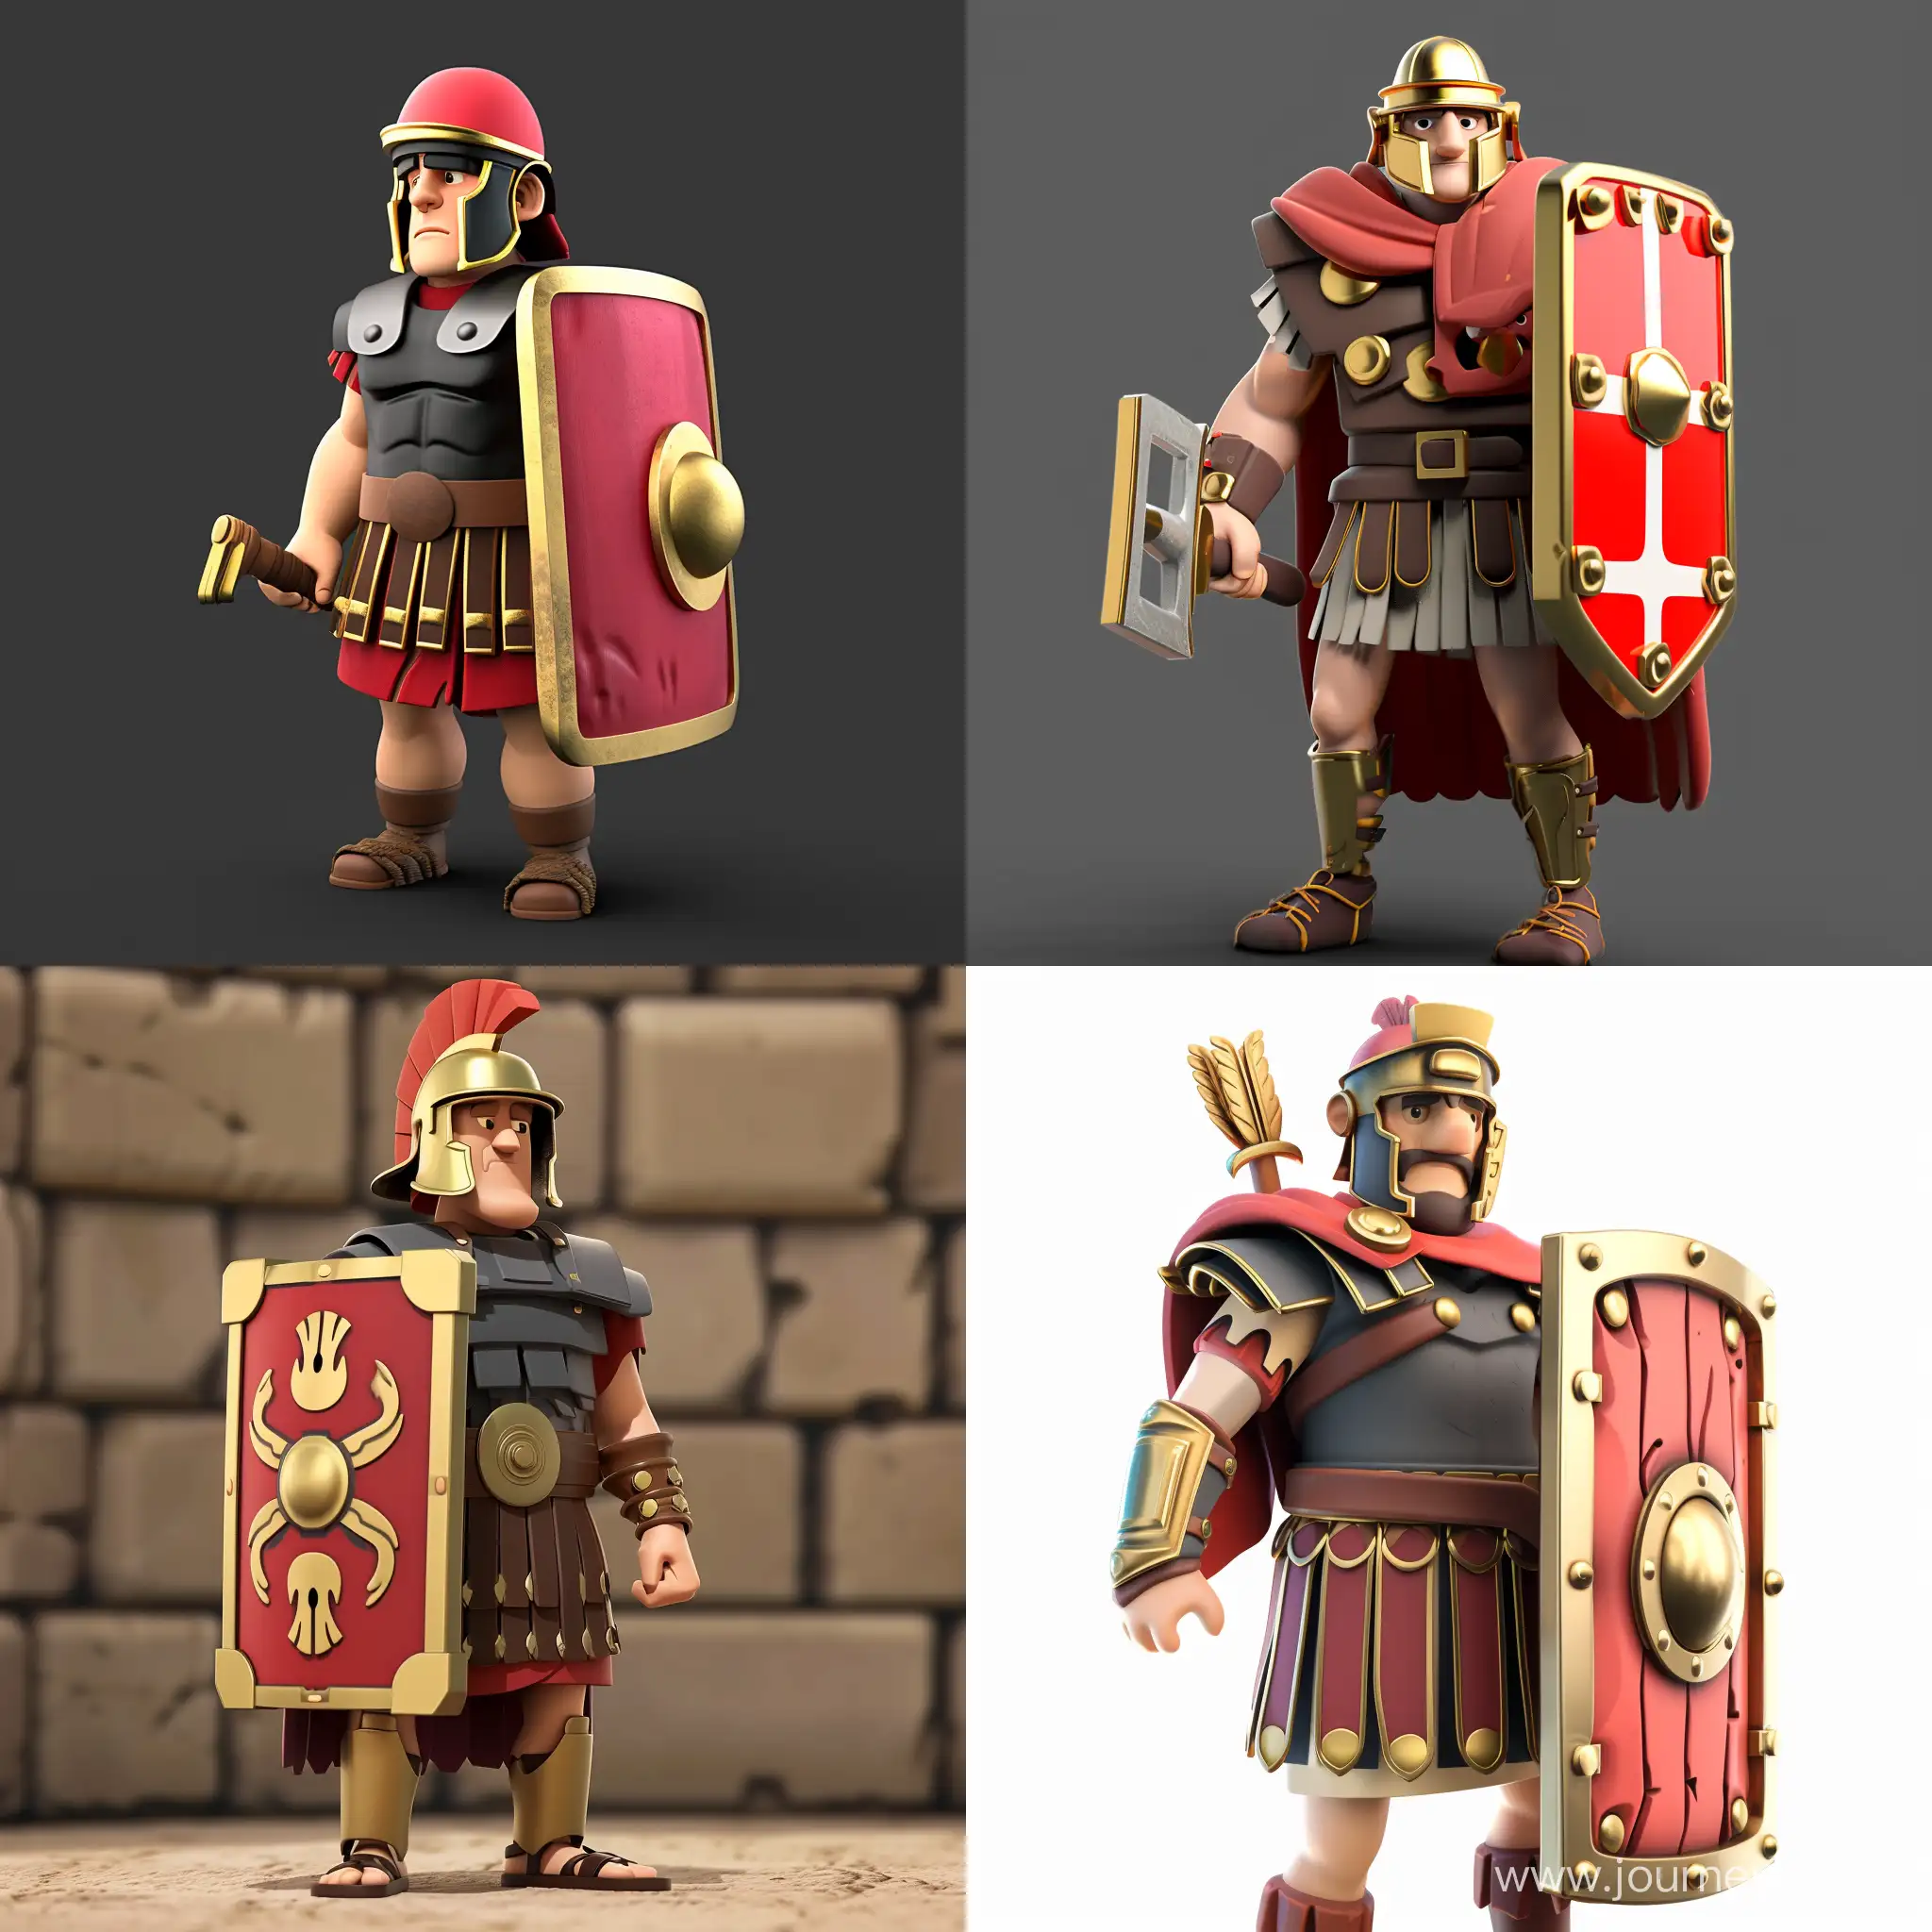 roman legionary, clash royale style, rectangular shield